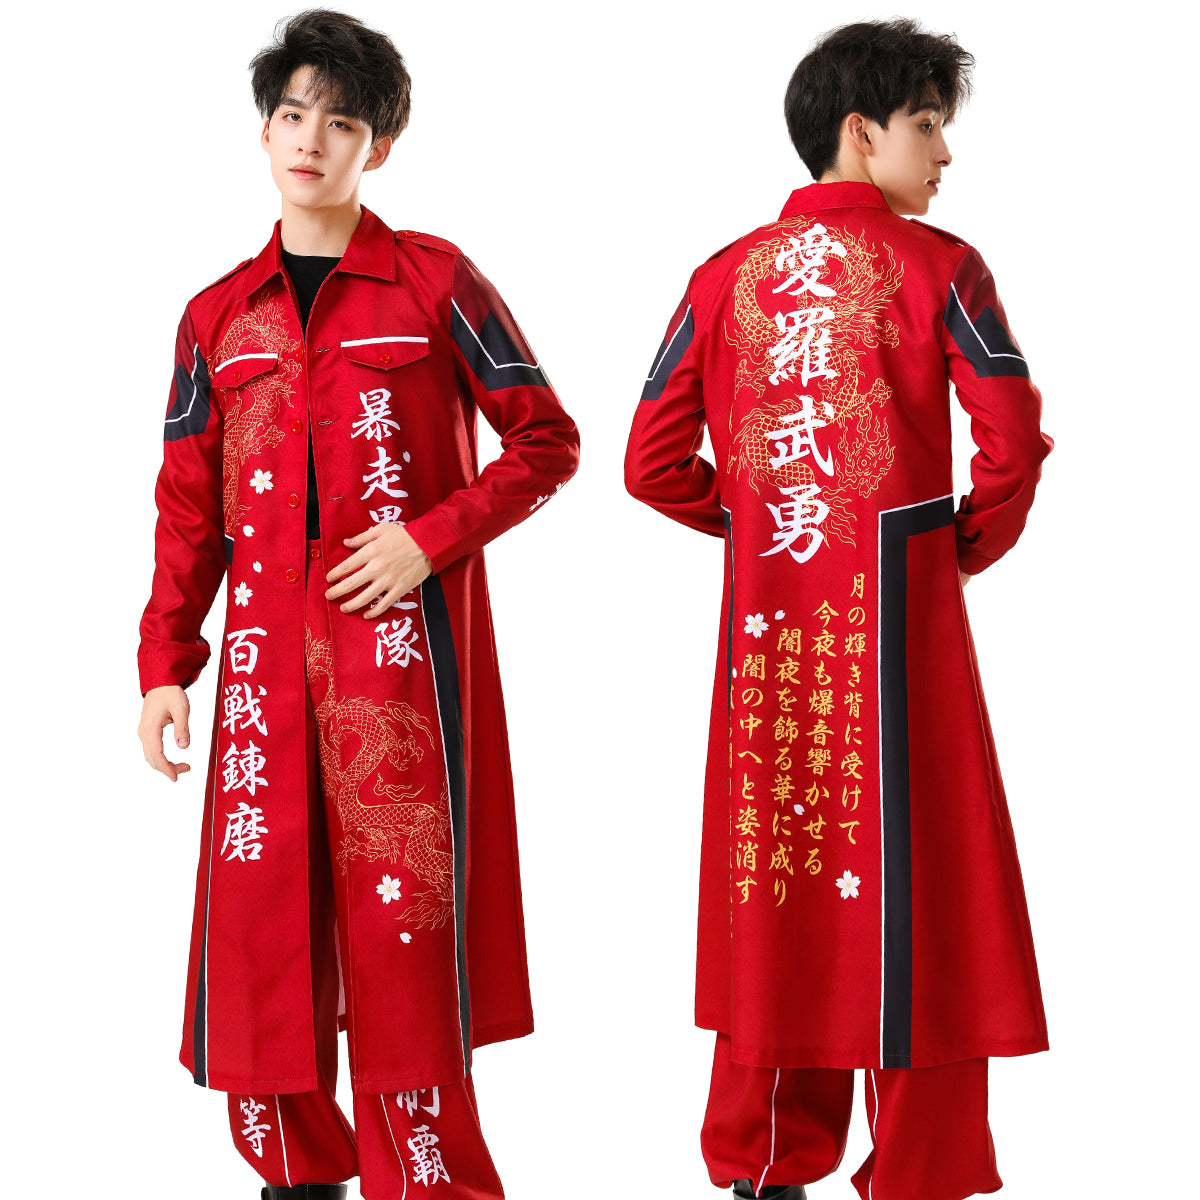 HOLOUN Japanese Bosozoku Kimono Cosplay Costume Special Attack Uniform Coat Dragon Pattern Red Color Halloween Christmas Carnival